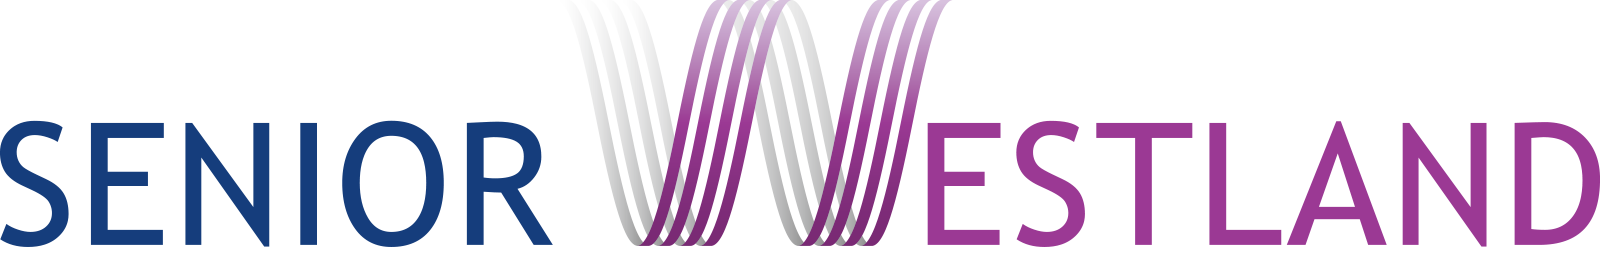 logo-westland-residentie